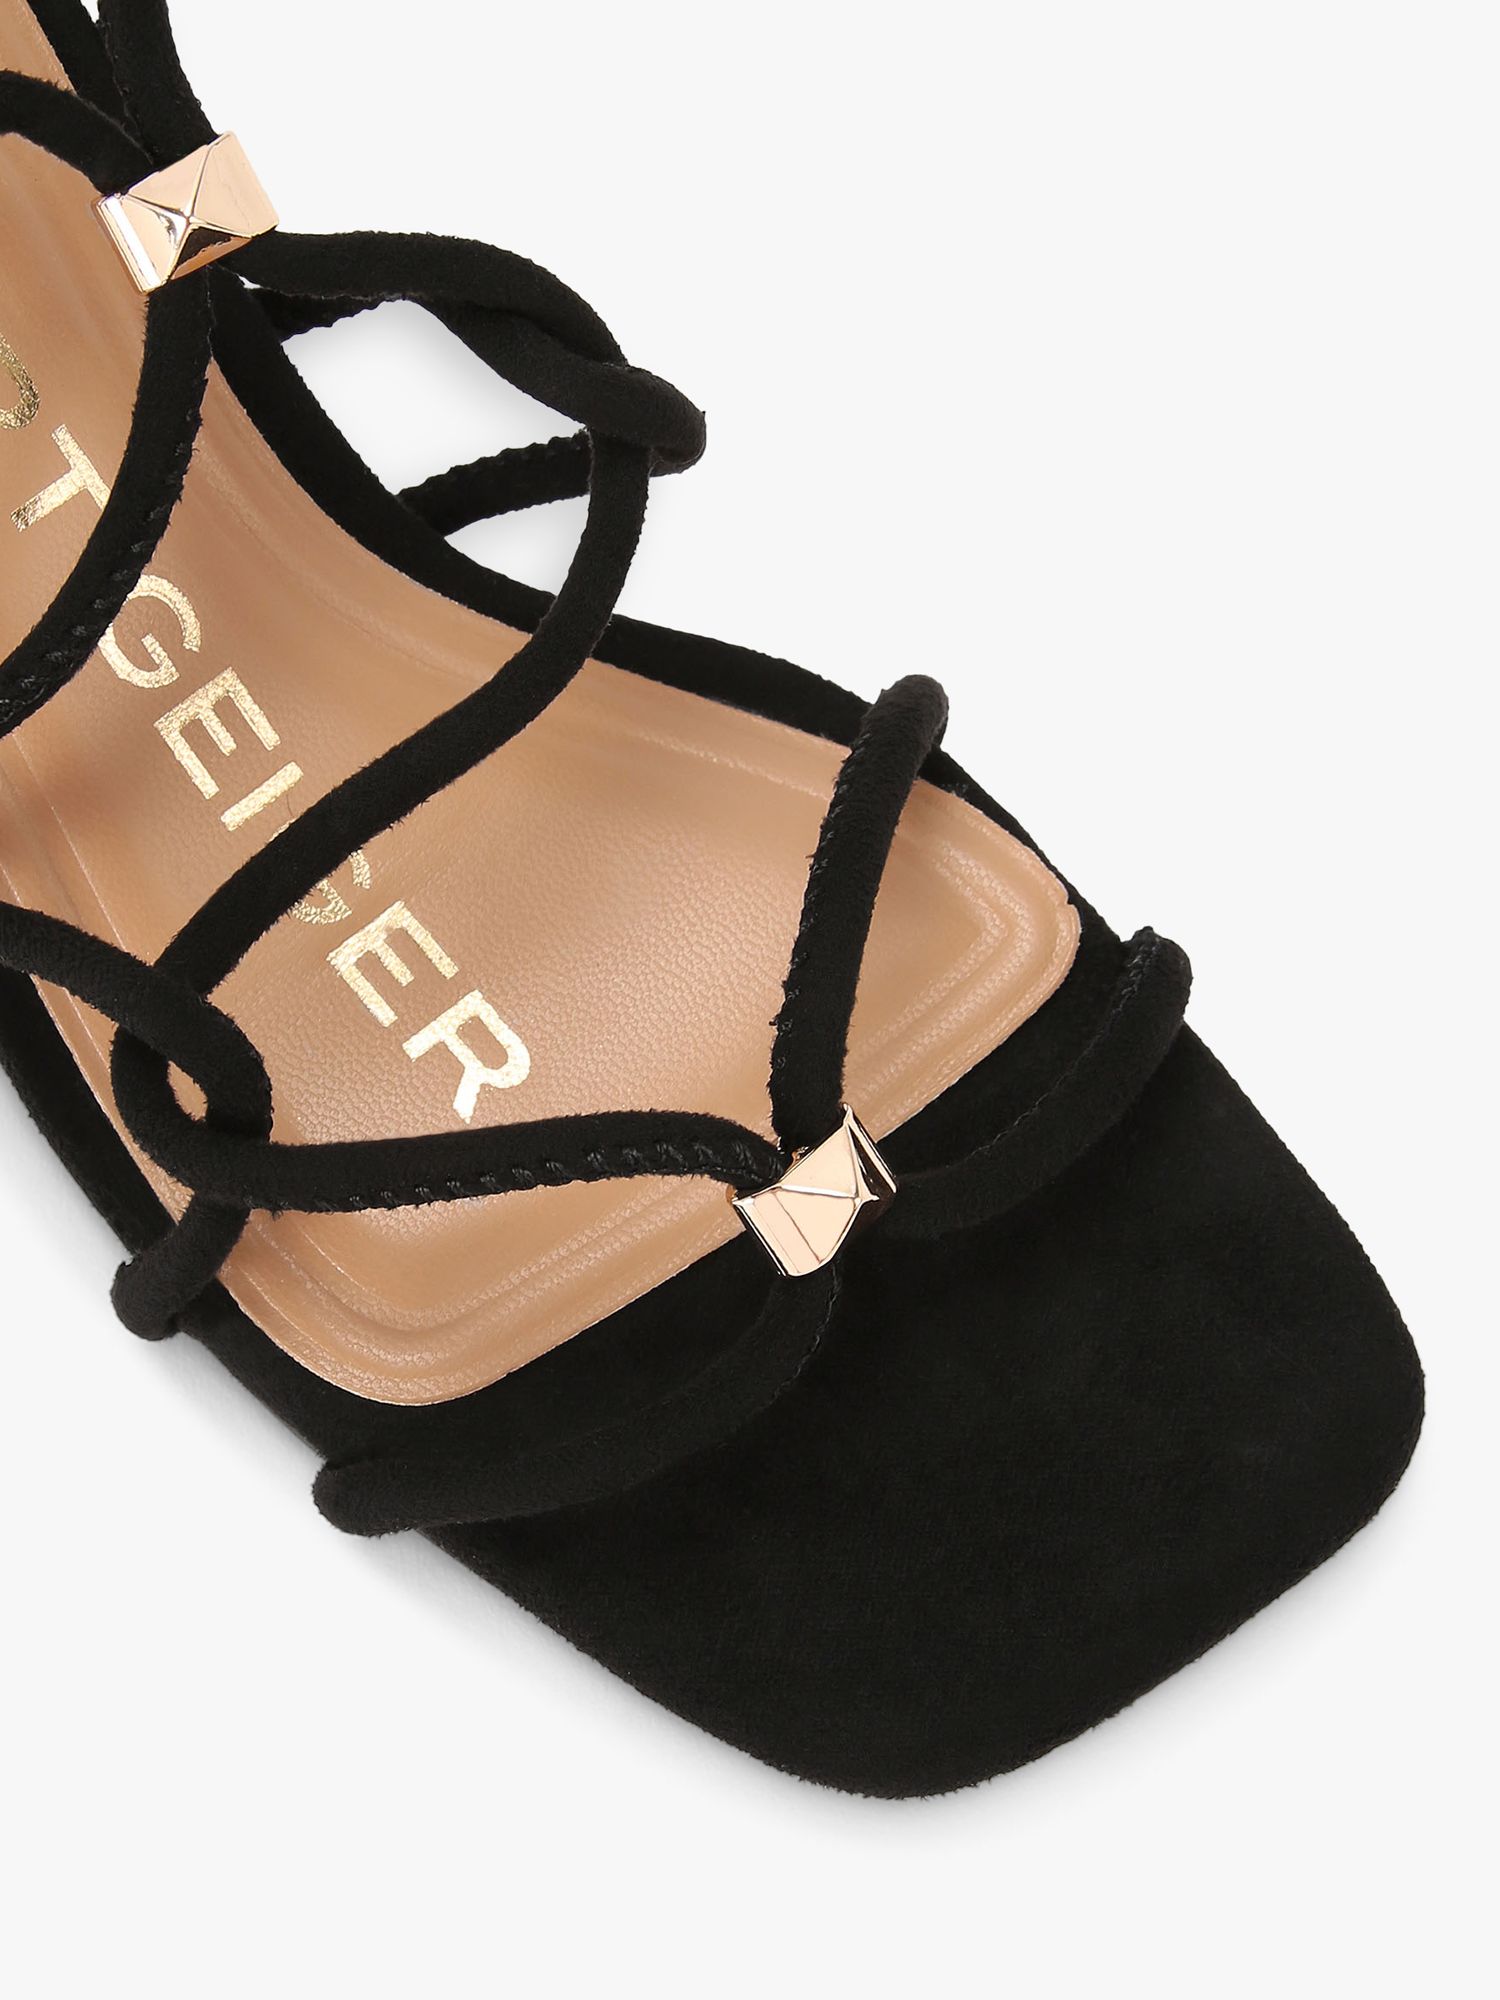 Buy KG Kurt Geiger Raya Block Heel Sandals Online at johnlewis.com